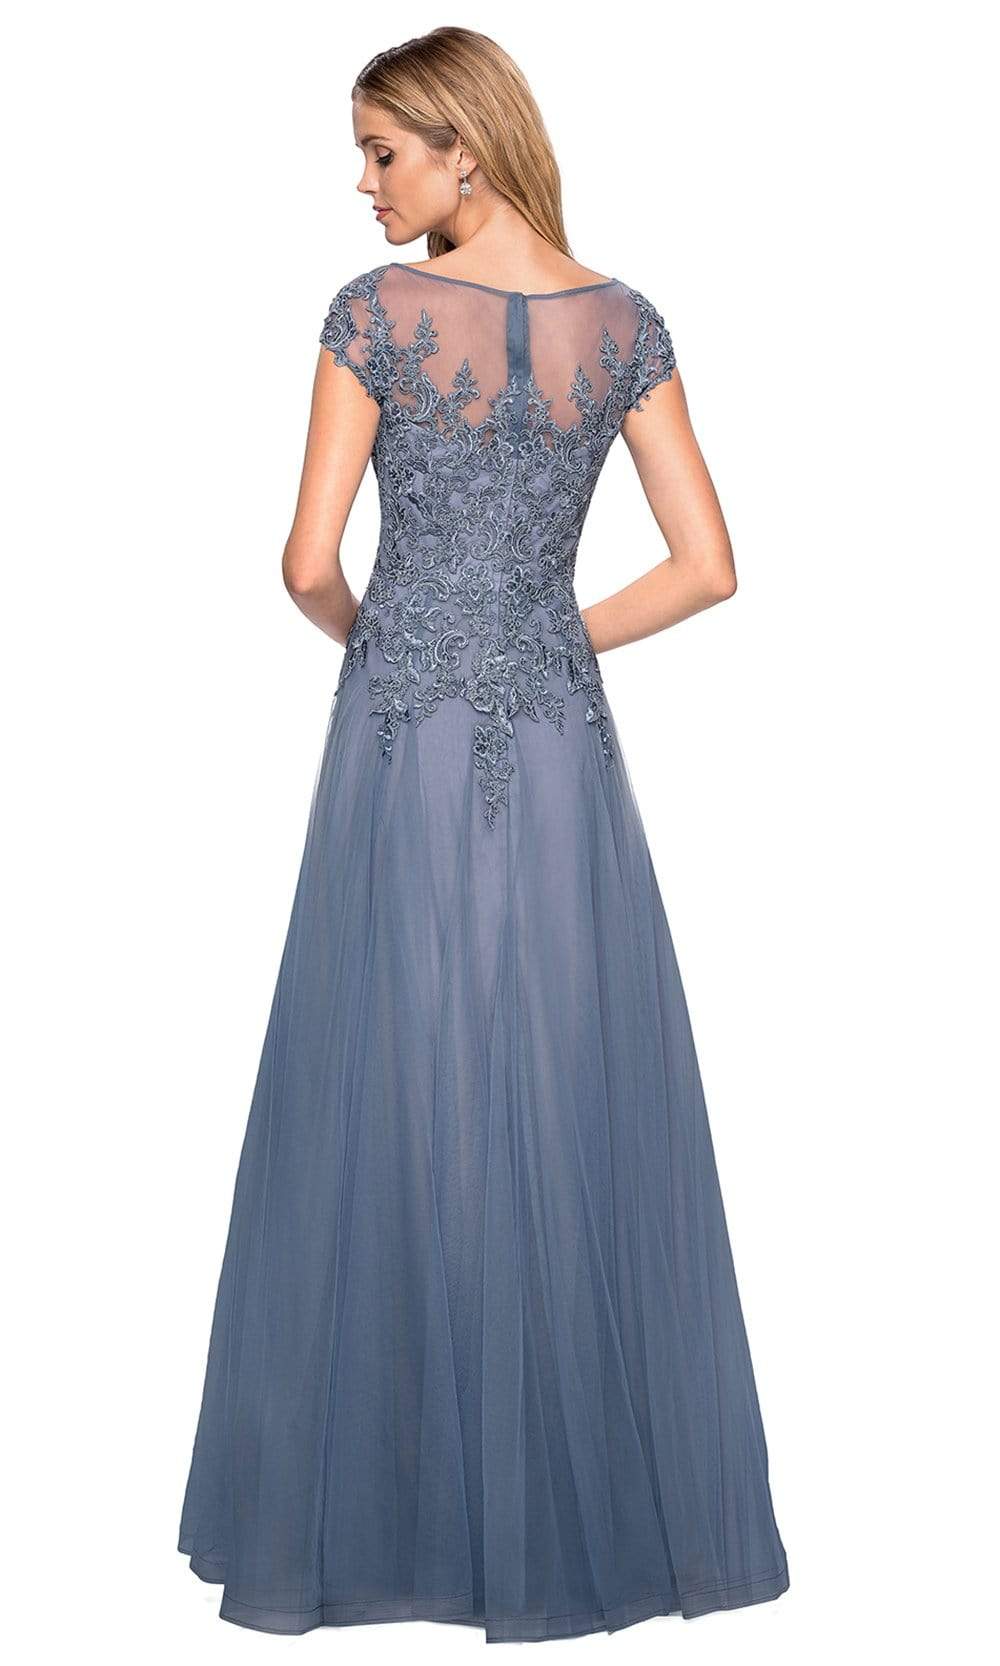 La Femme - Embroidered Lace Bateau A-line Dress 26893 - 1pc Smoky Blue in size 14 Available CCSALE